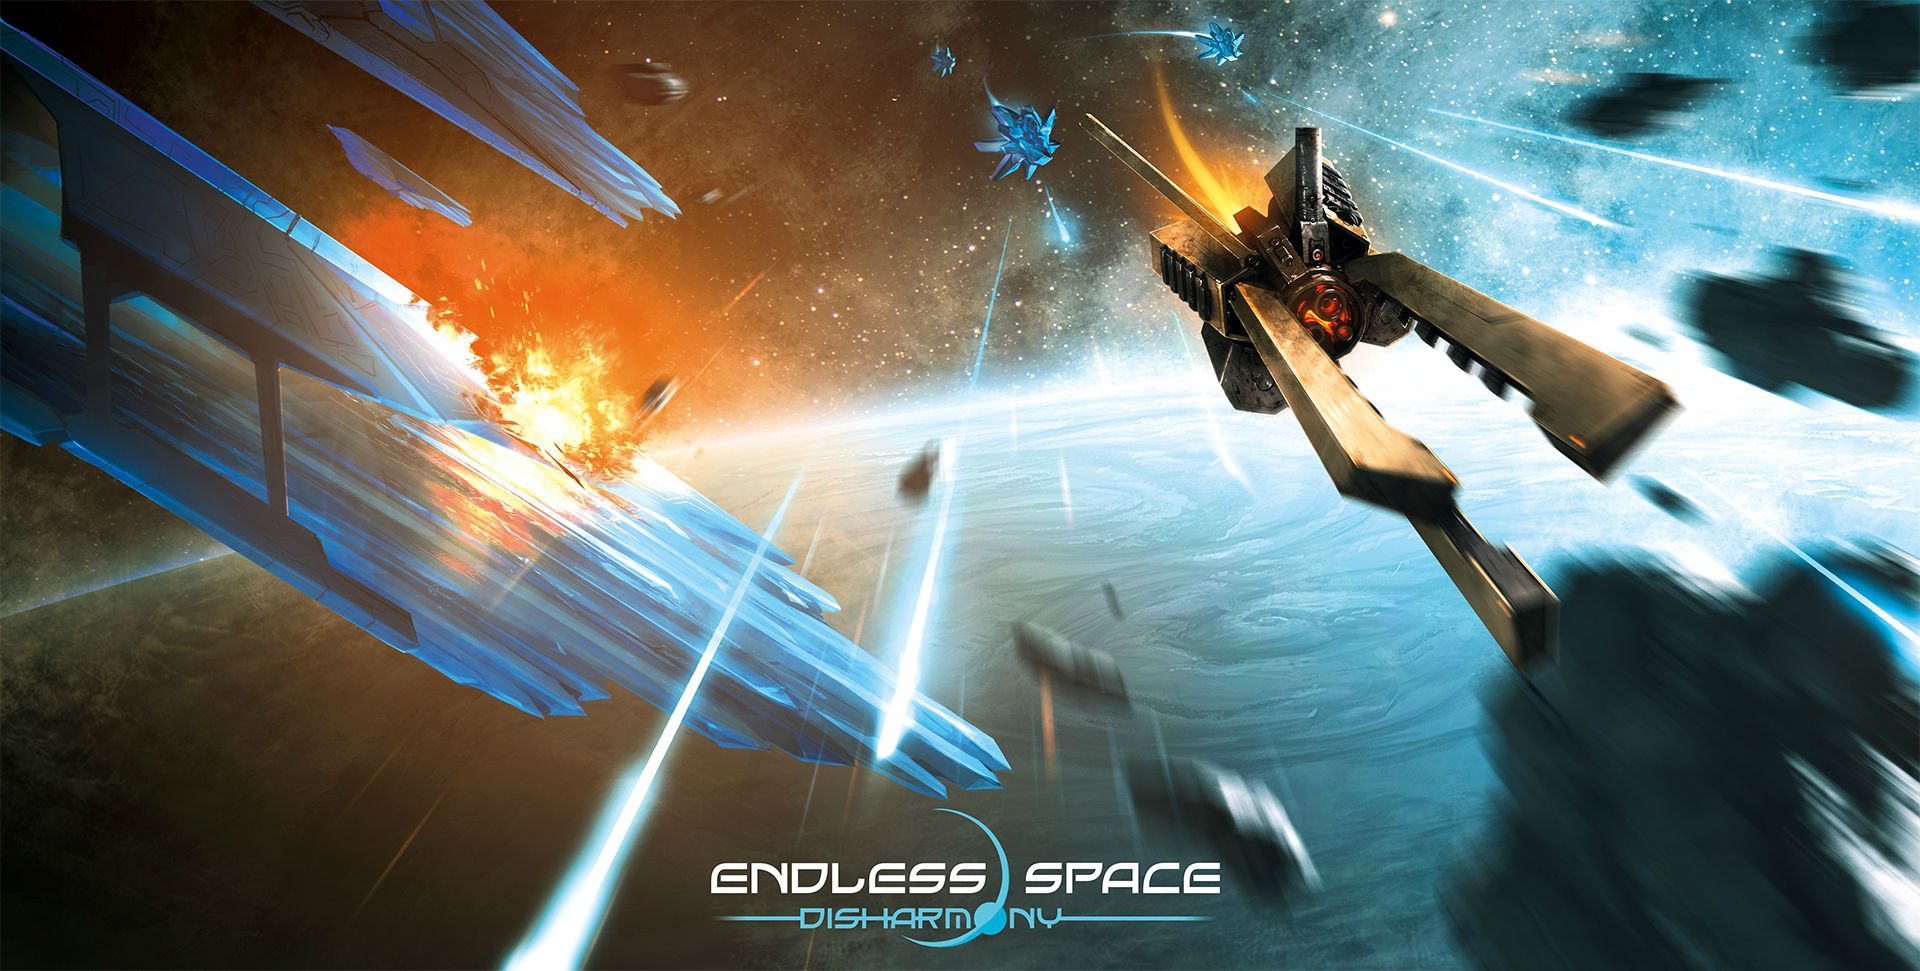 Free Is Nice Endless Space Collection ビデオゲームについて話しましょう